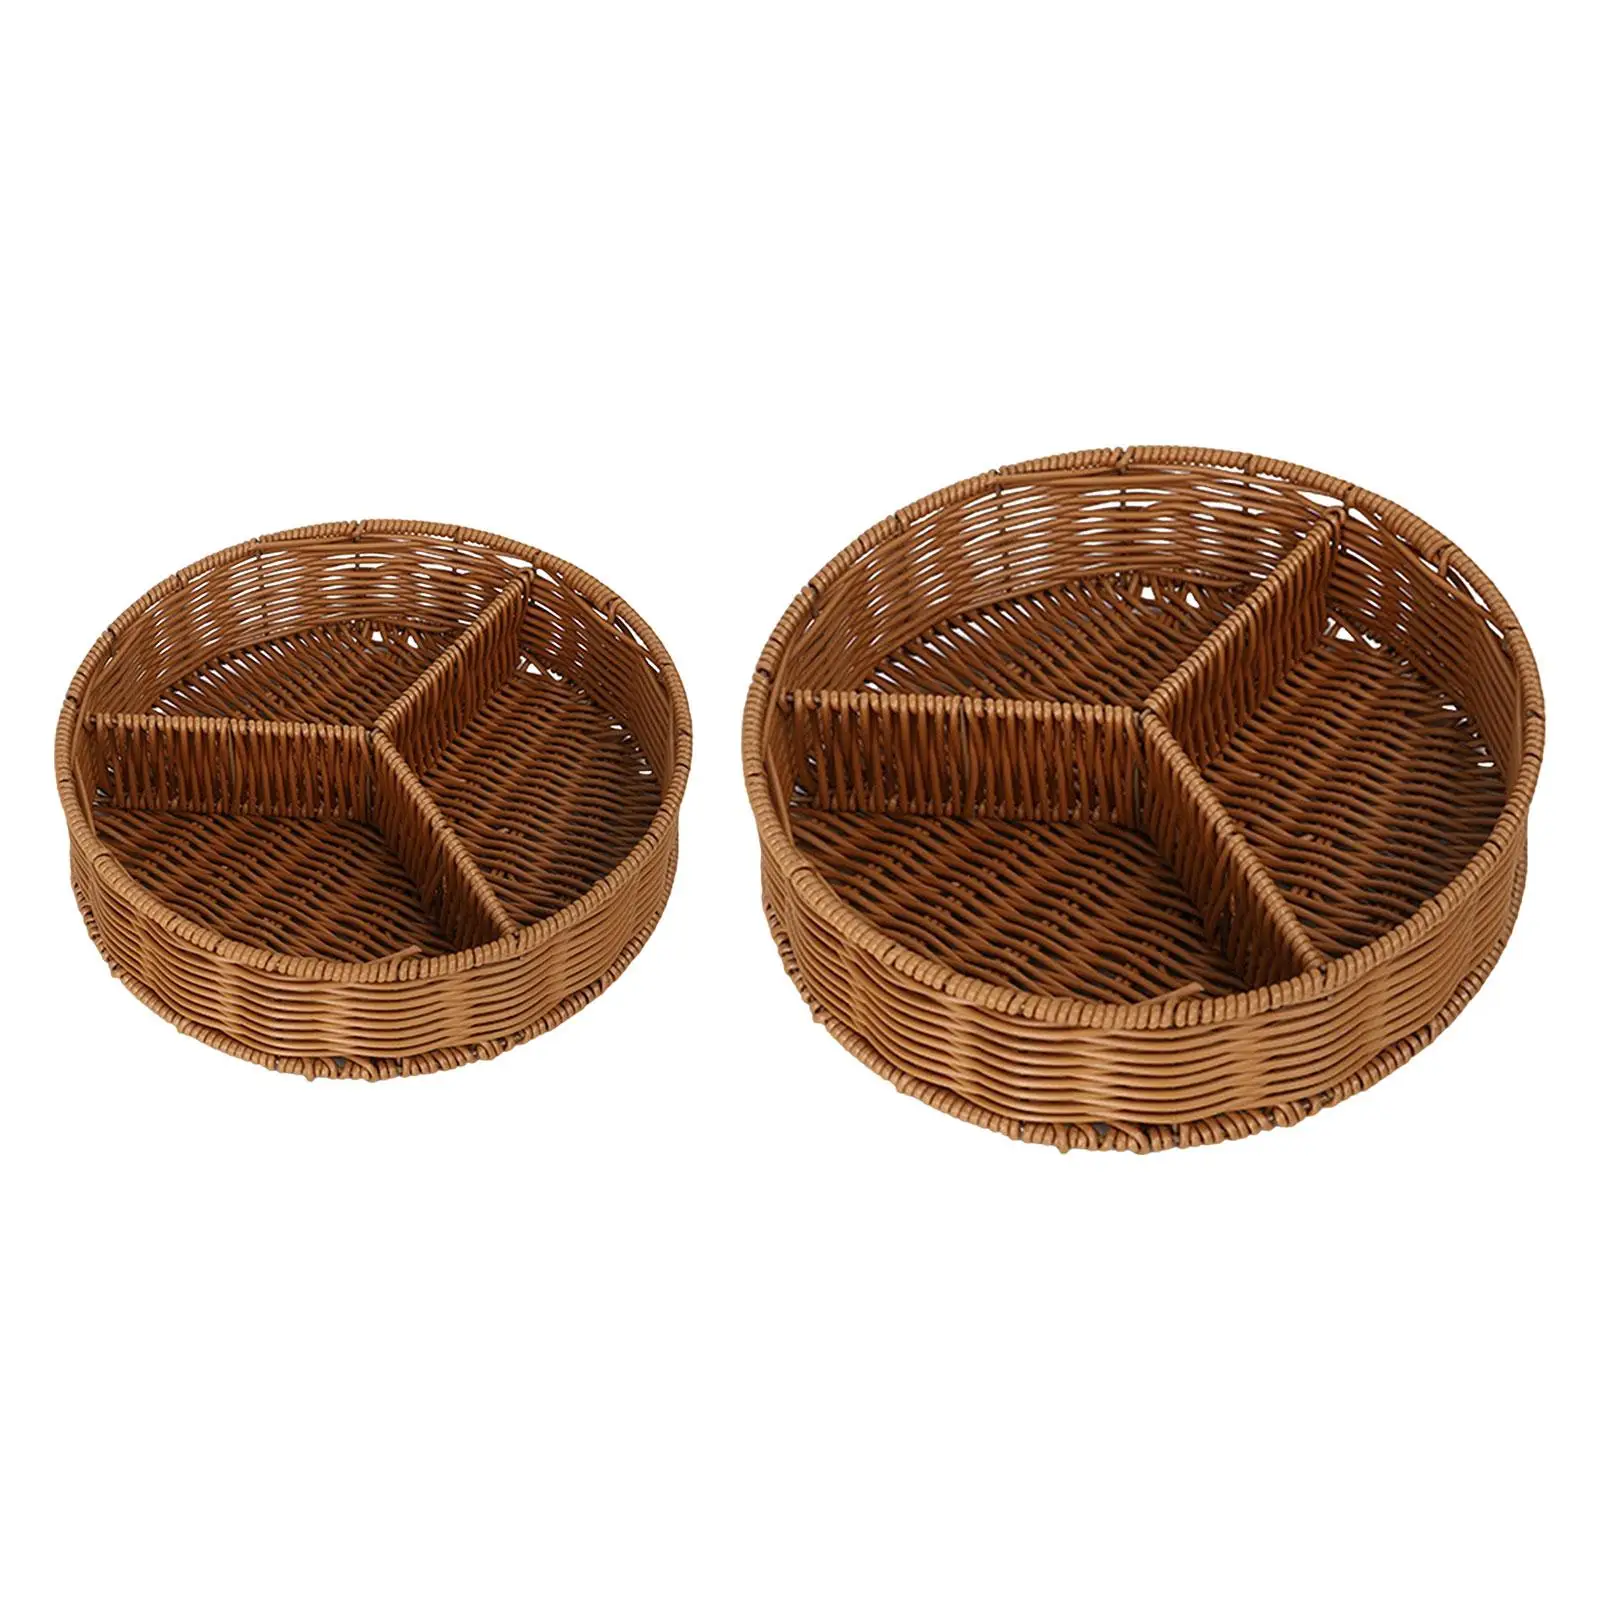 Imitation Rattan Bread Basket Organizer Fruit Plate Trays Handmade Wicker Storage Baskets for Breakfast Fruits